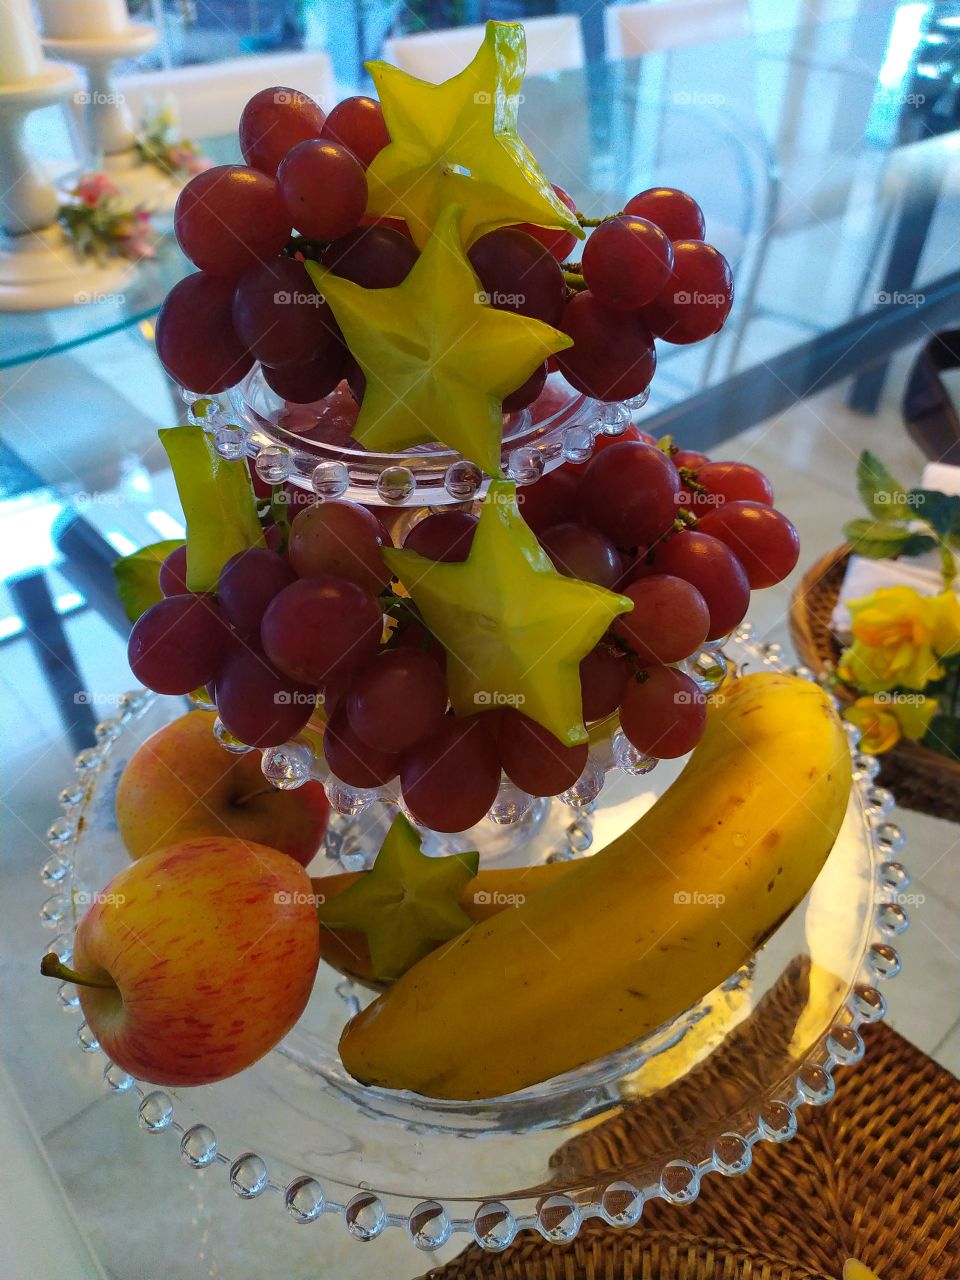 Bananas apples grape and star fruit